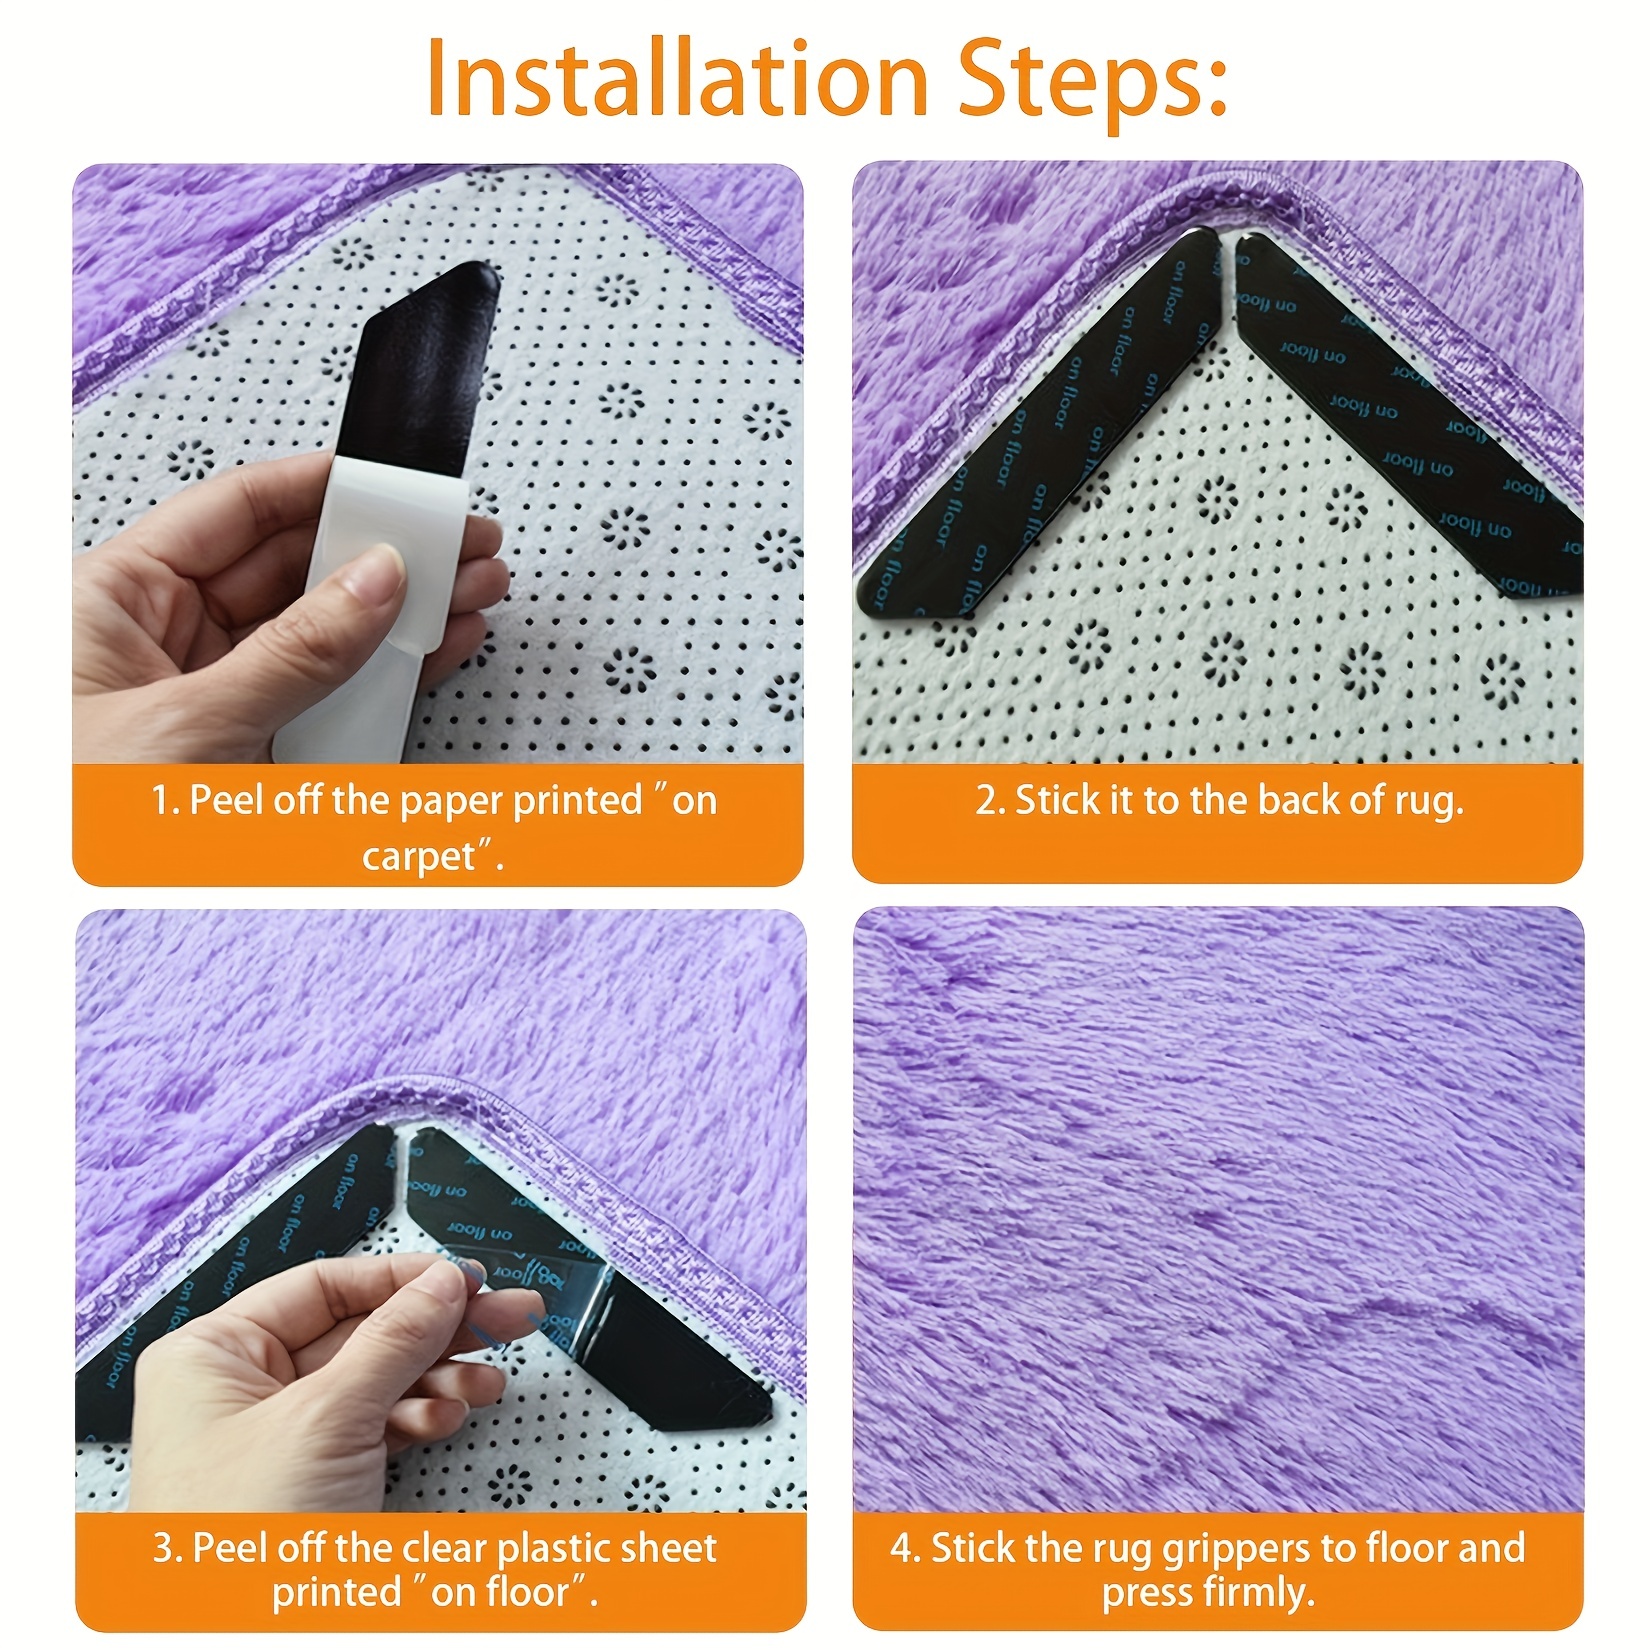 1/16Pcs Carpet Non-slip Sticker Reusable Washable Anti Curling